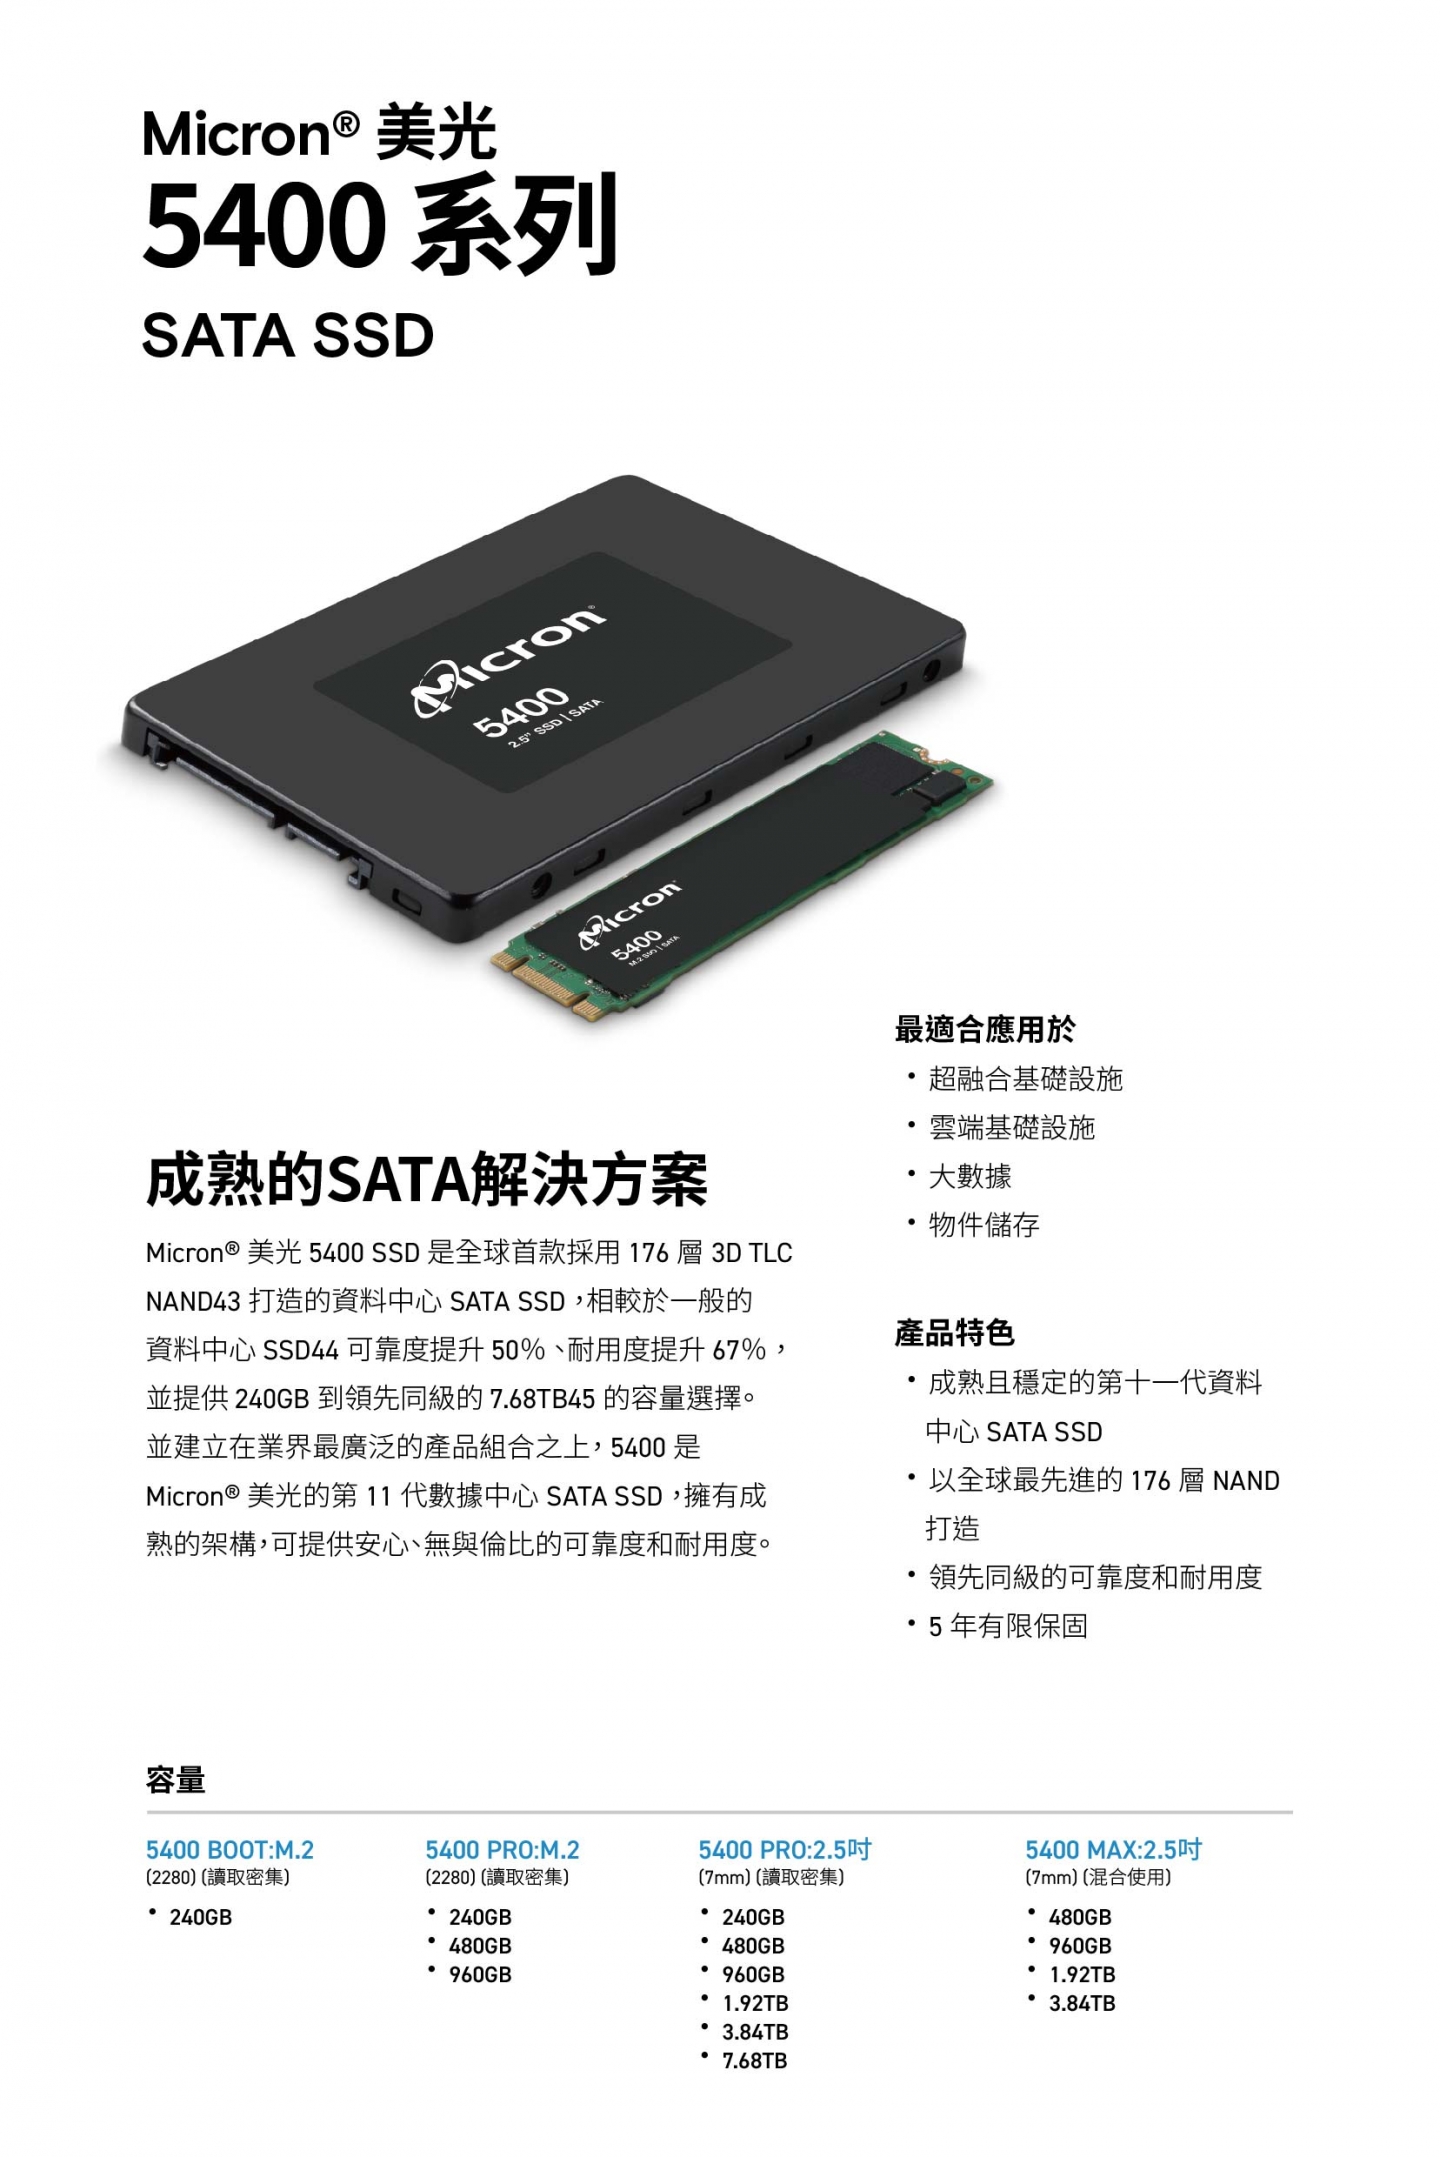 Micron 美光5400系列SATA SSD - 產品資訊| 青雲國際- 美光Crucial 品牌